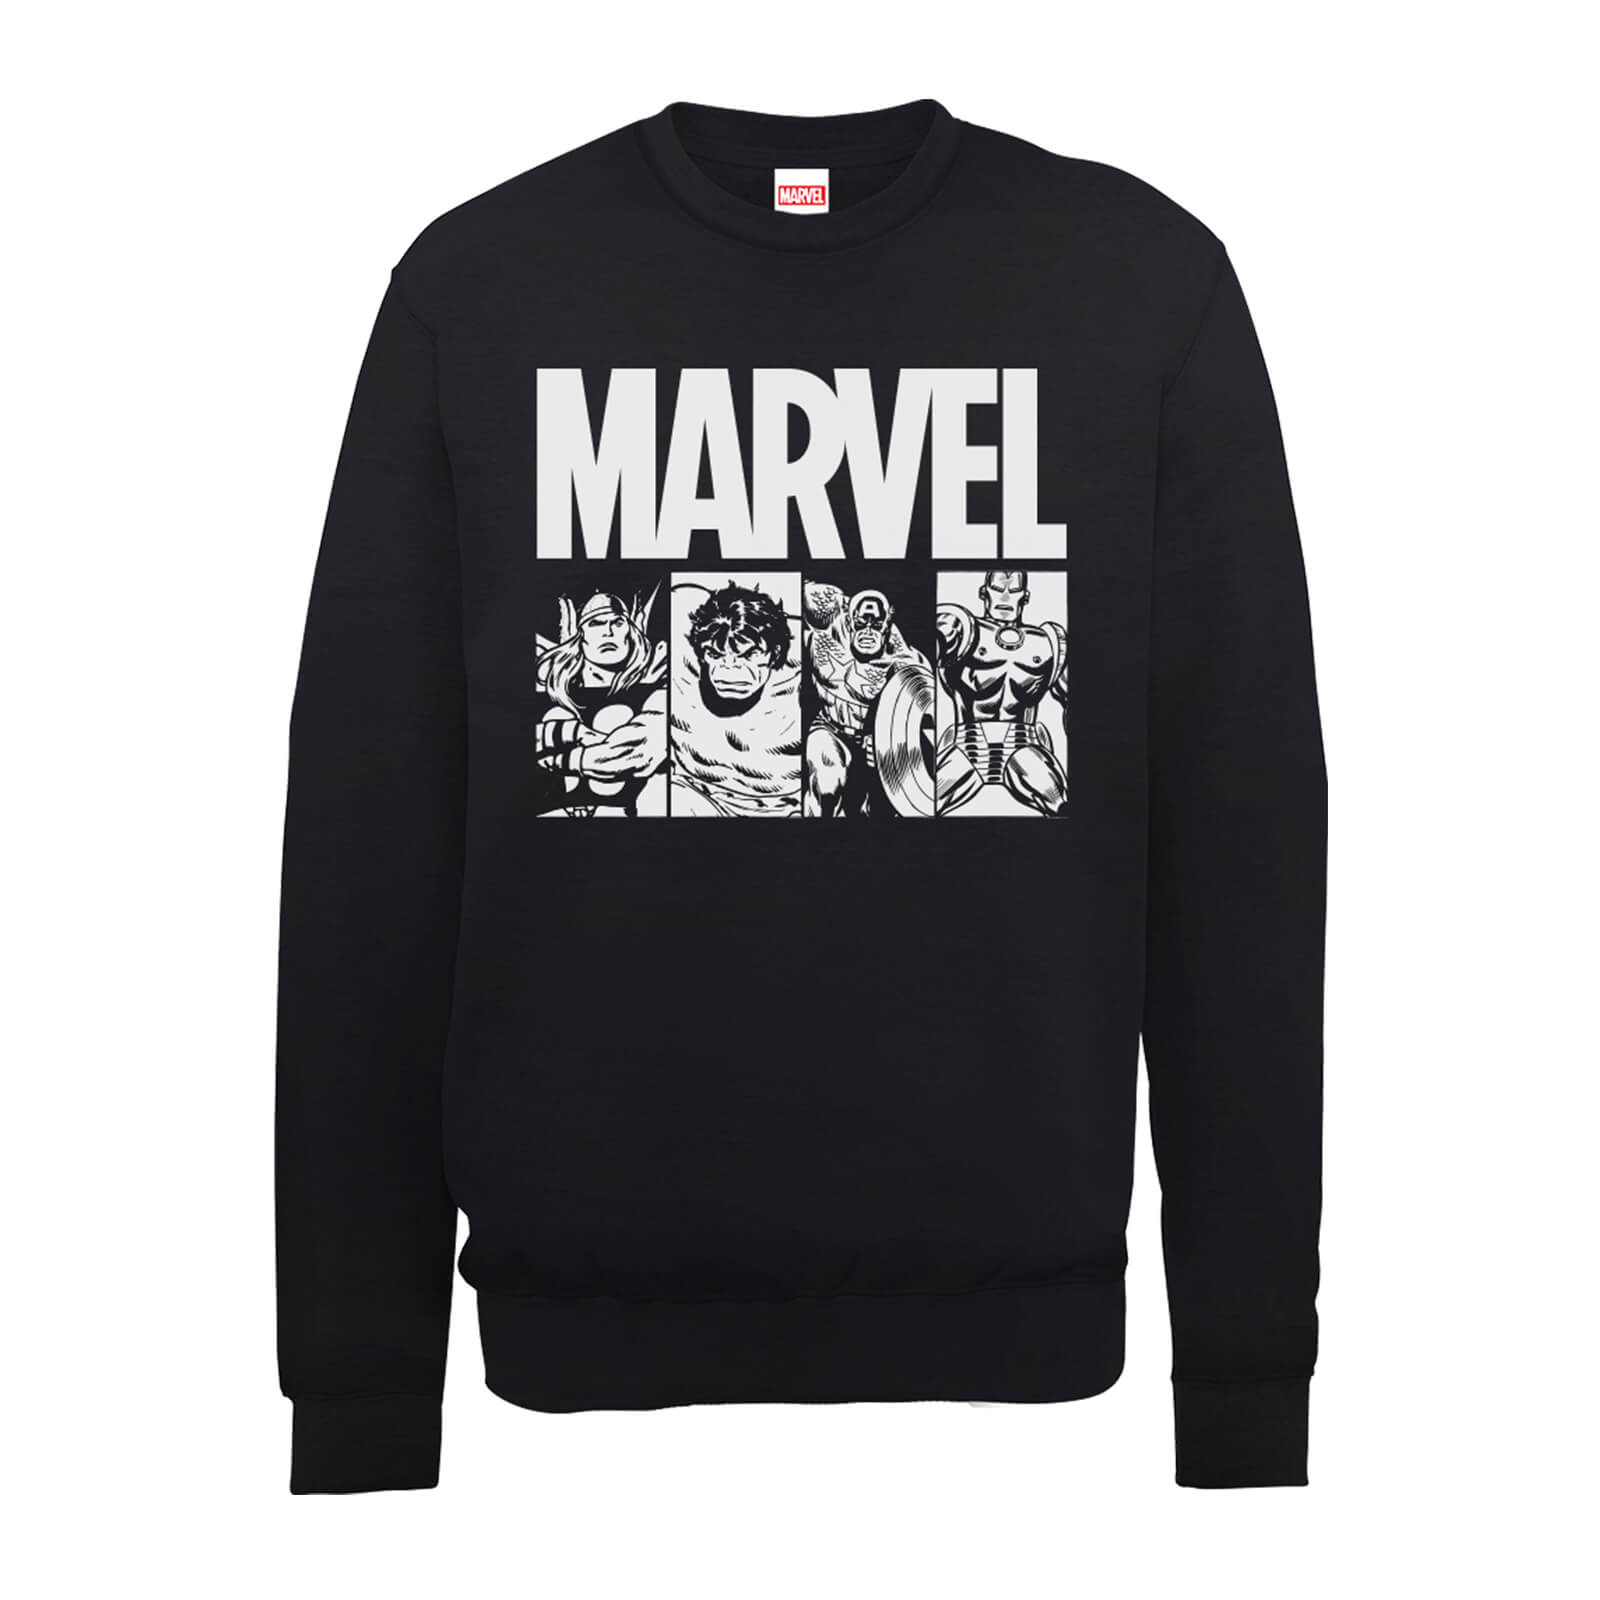 Marvel Comics Action Tiles Men's Black Sweatshirt - M - Black